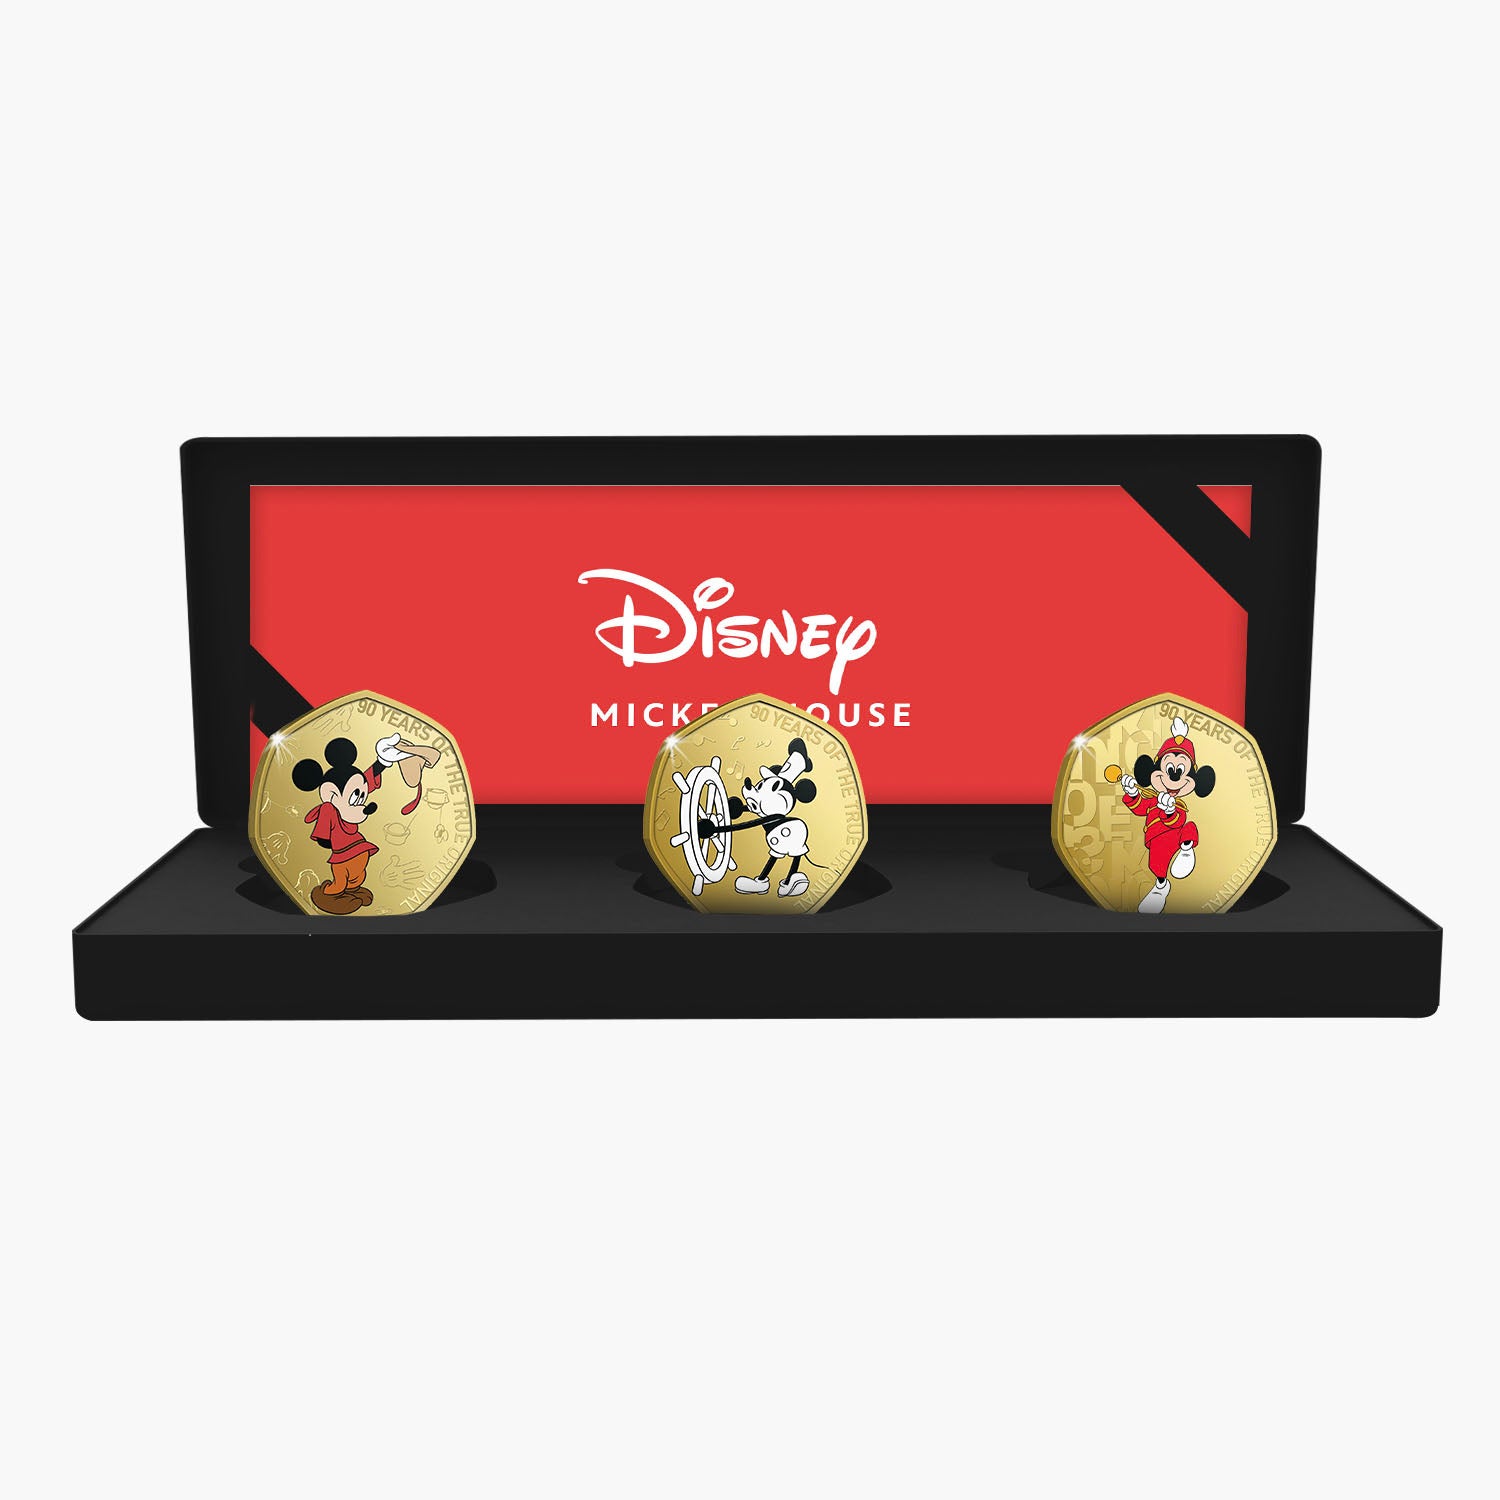 Disney Mickey Mouse Box Set